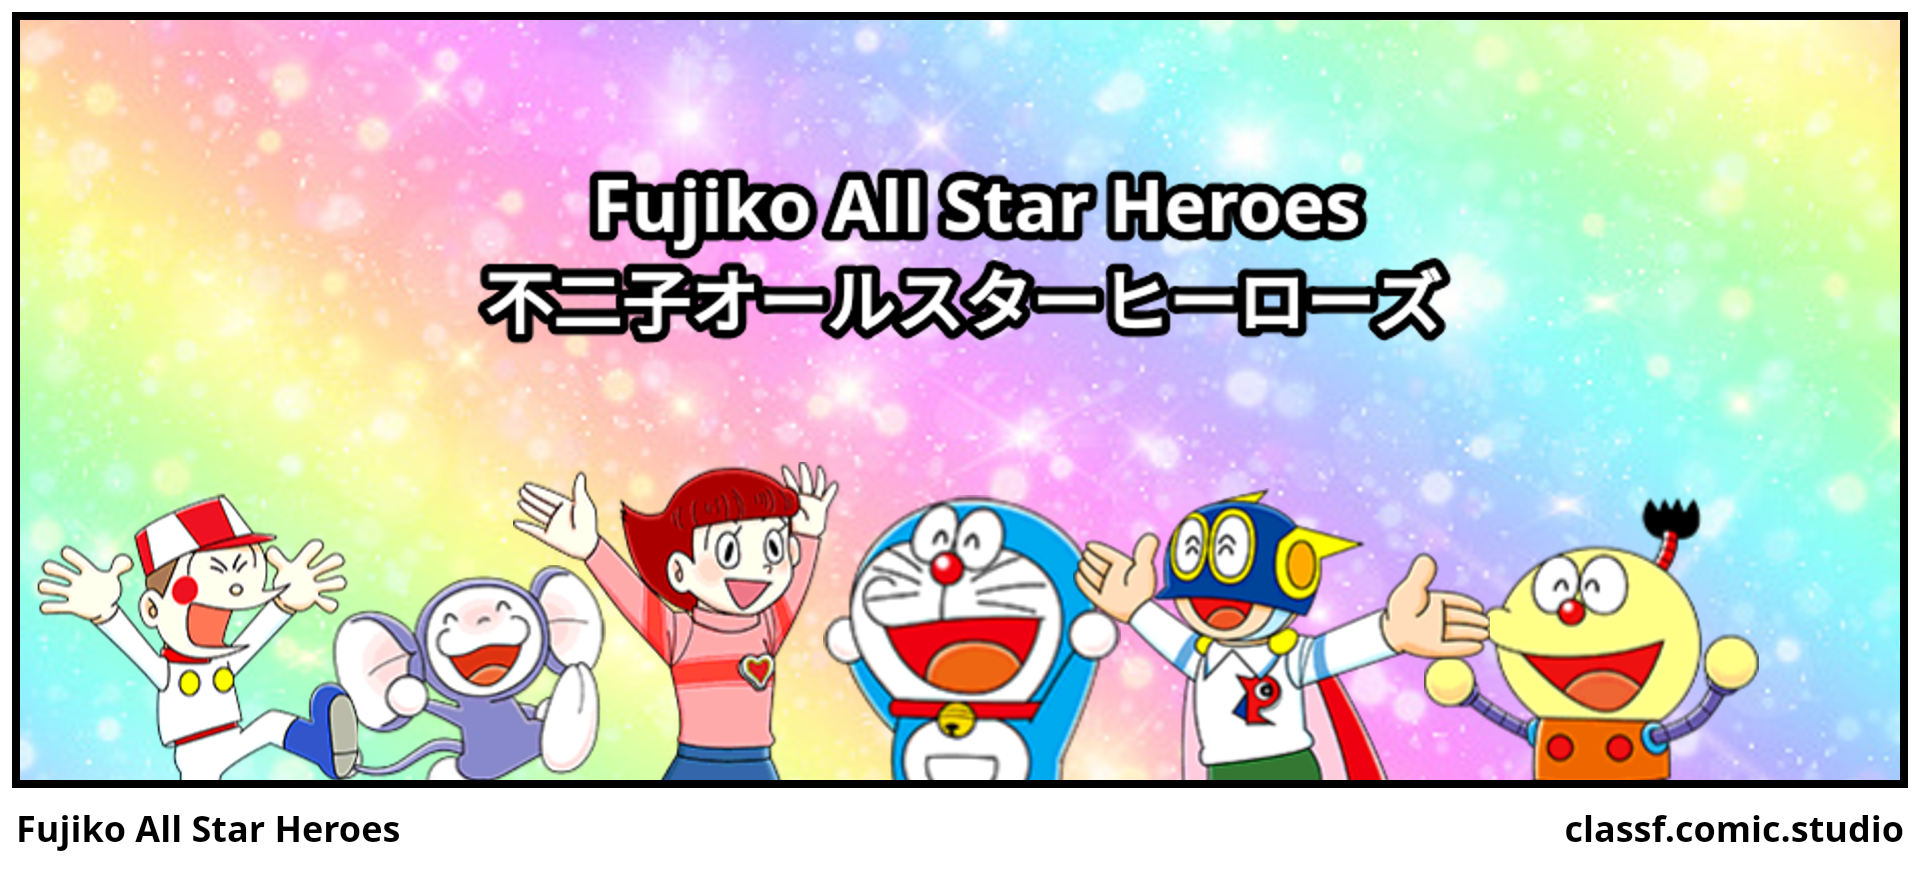 Fujiko All Star Heroes